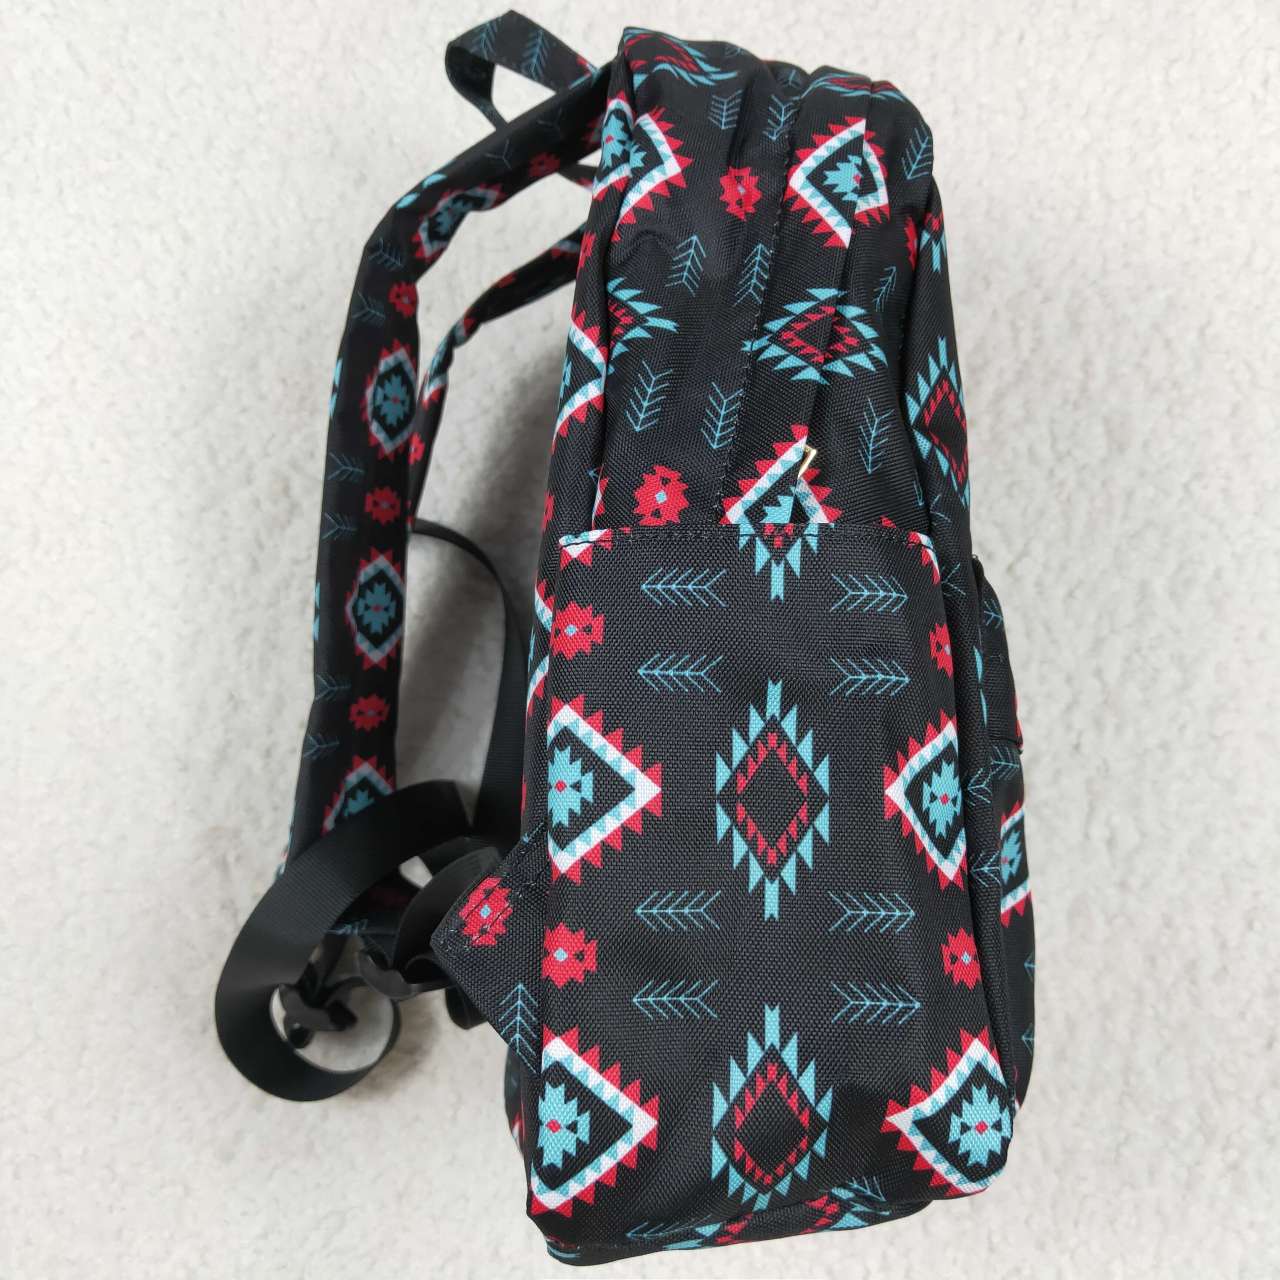 Geometric figure print child bag backpack